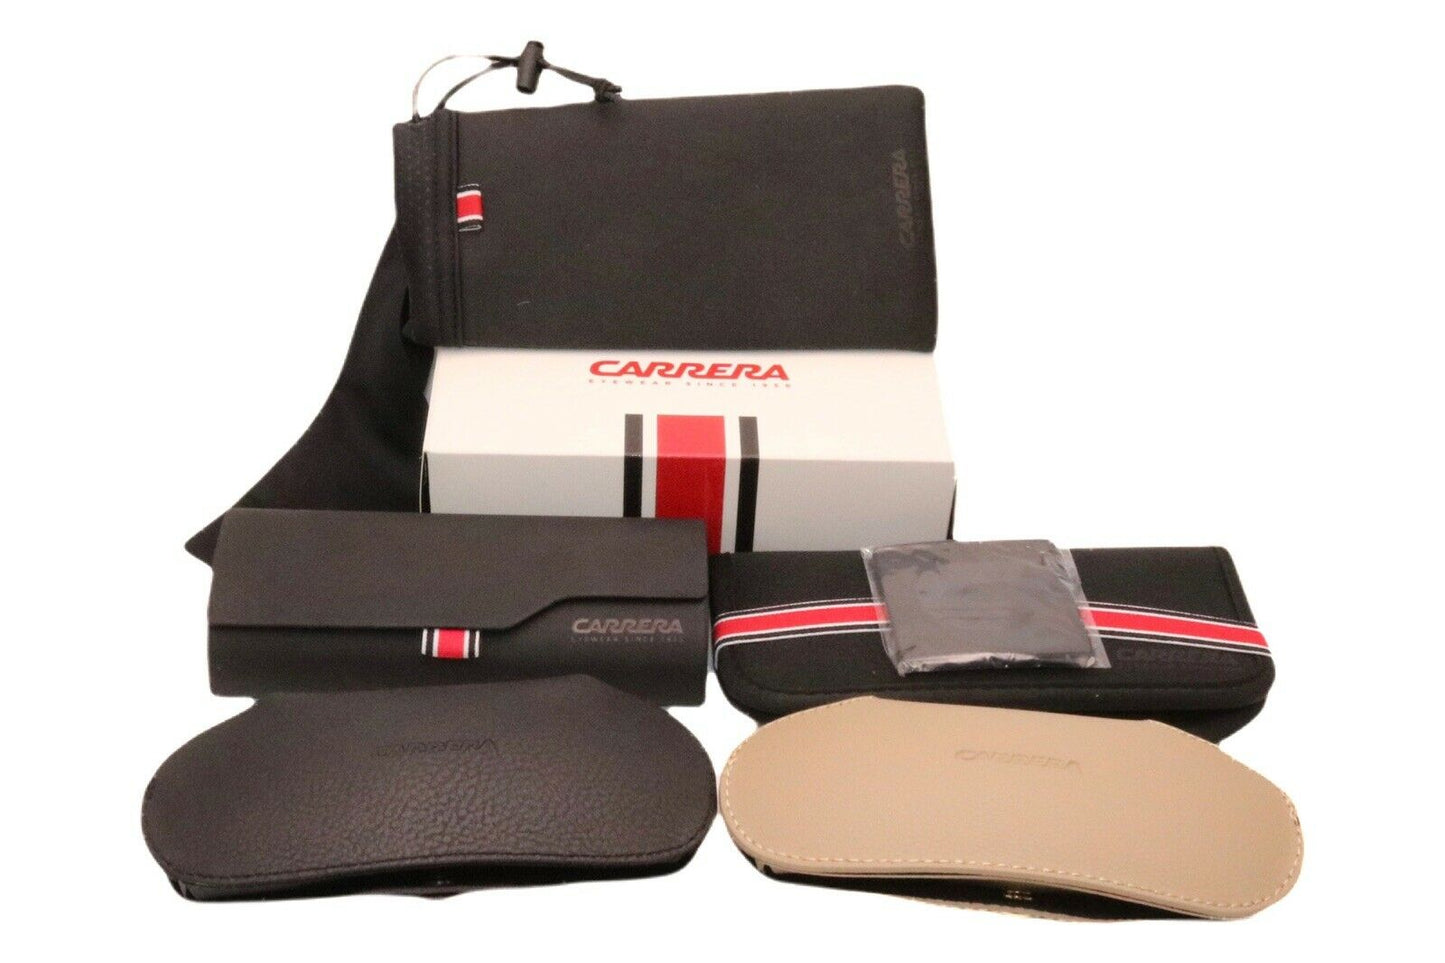 Carrera CARRERA 8046/S-0807 IR 54mm New Sunglasses